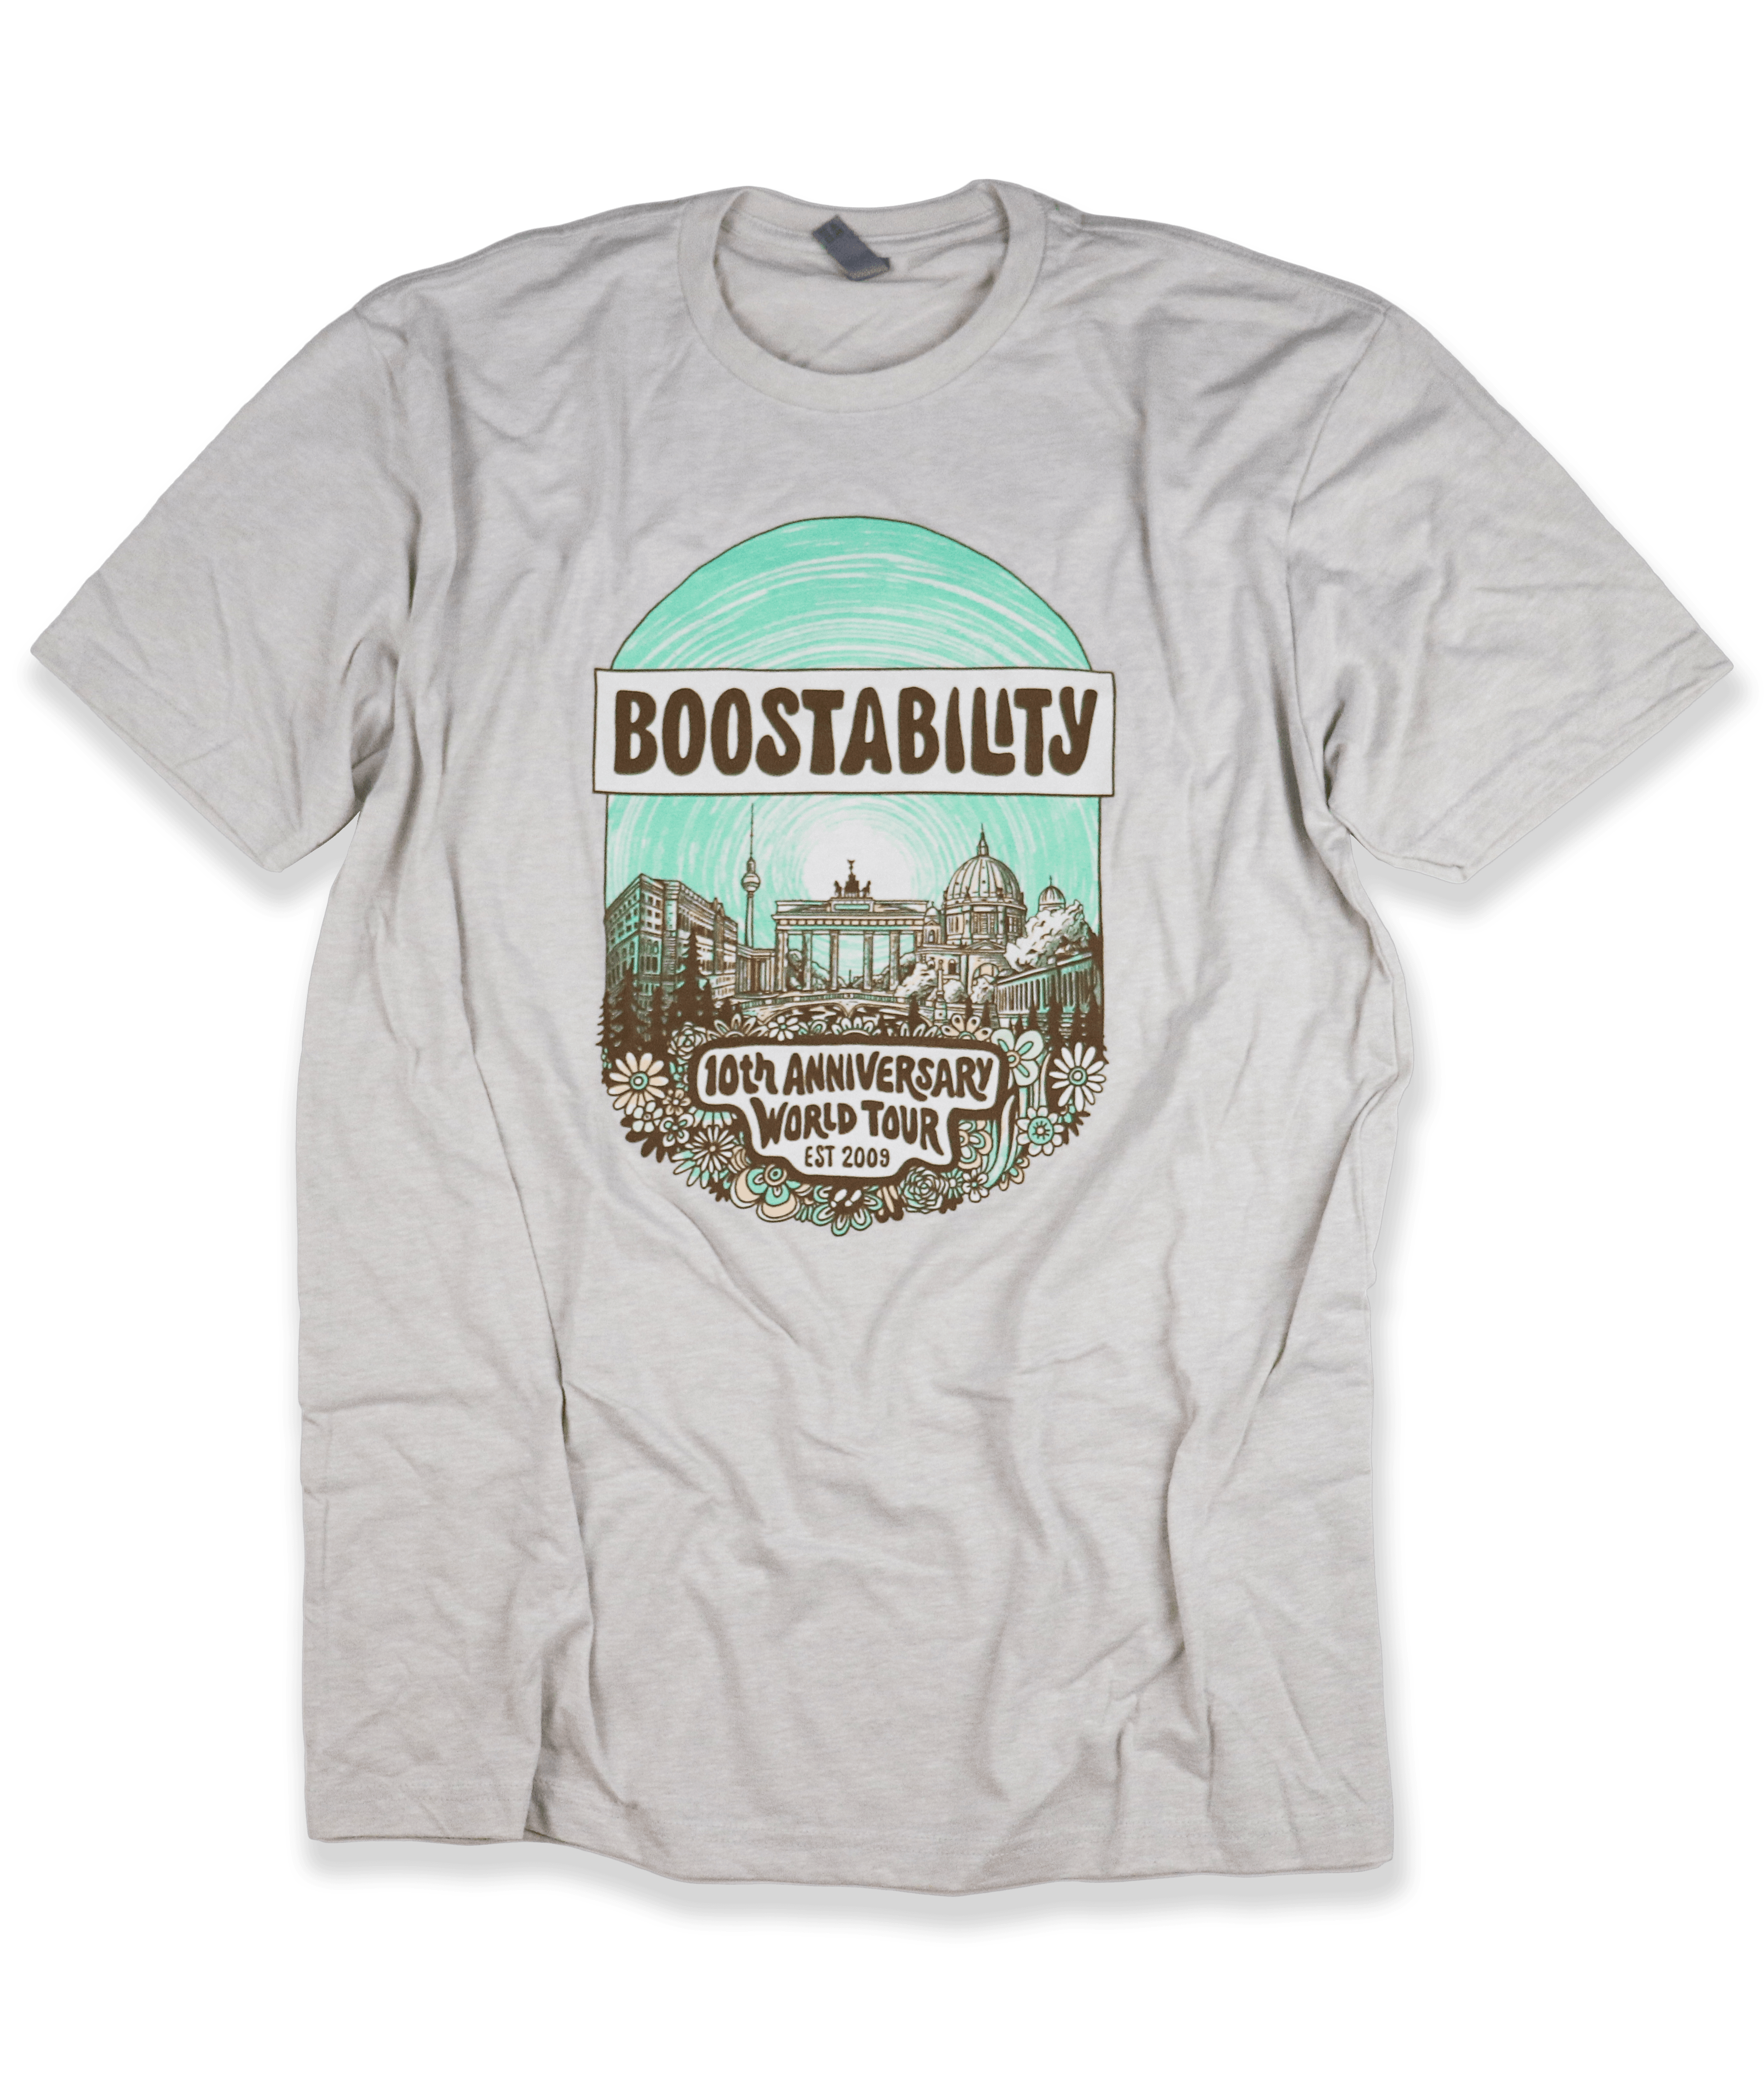 Boostability 10th Anniversary t-shirt